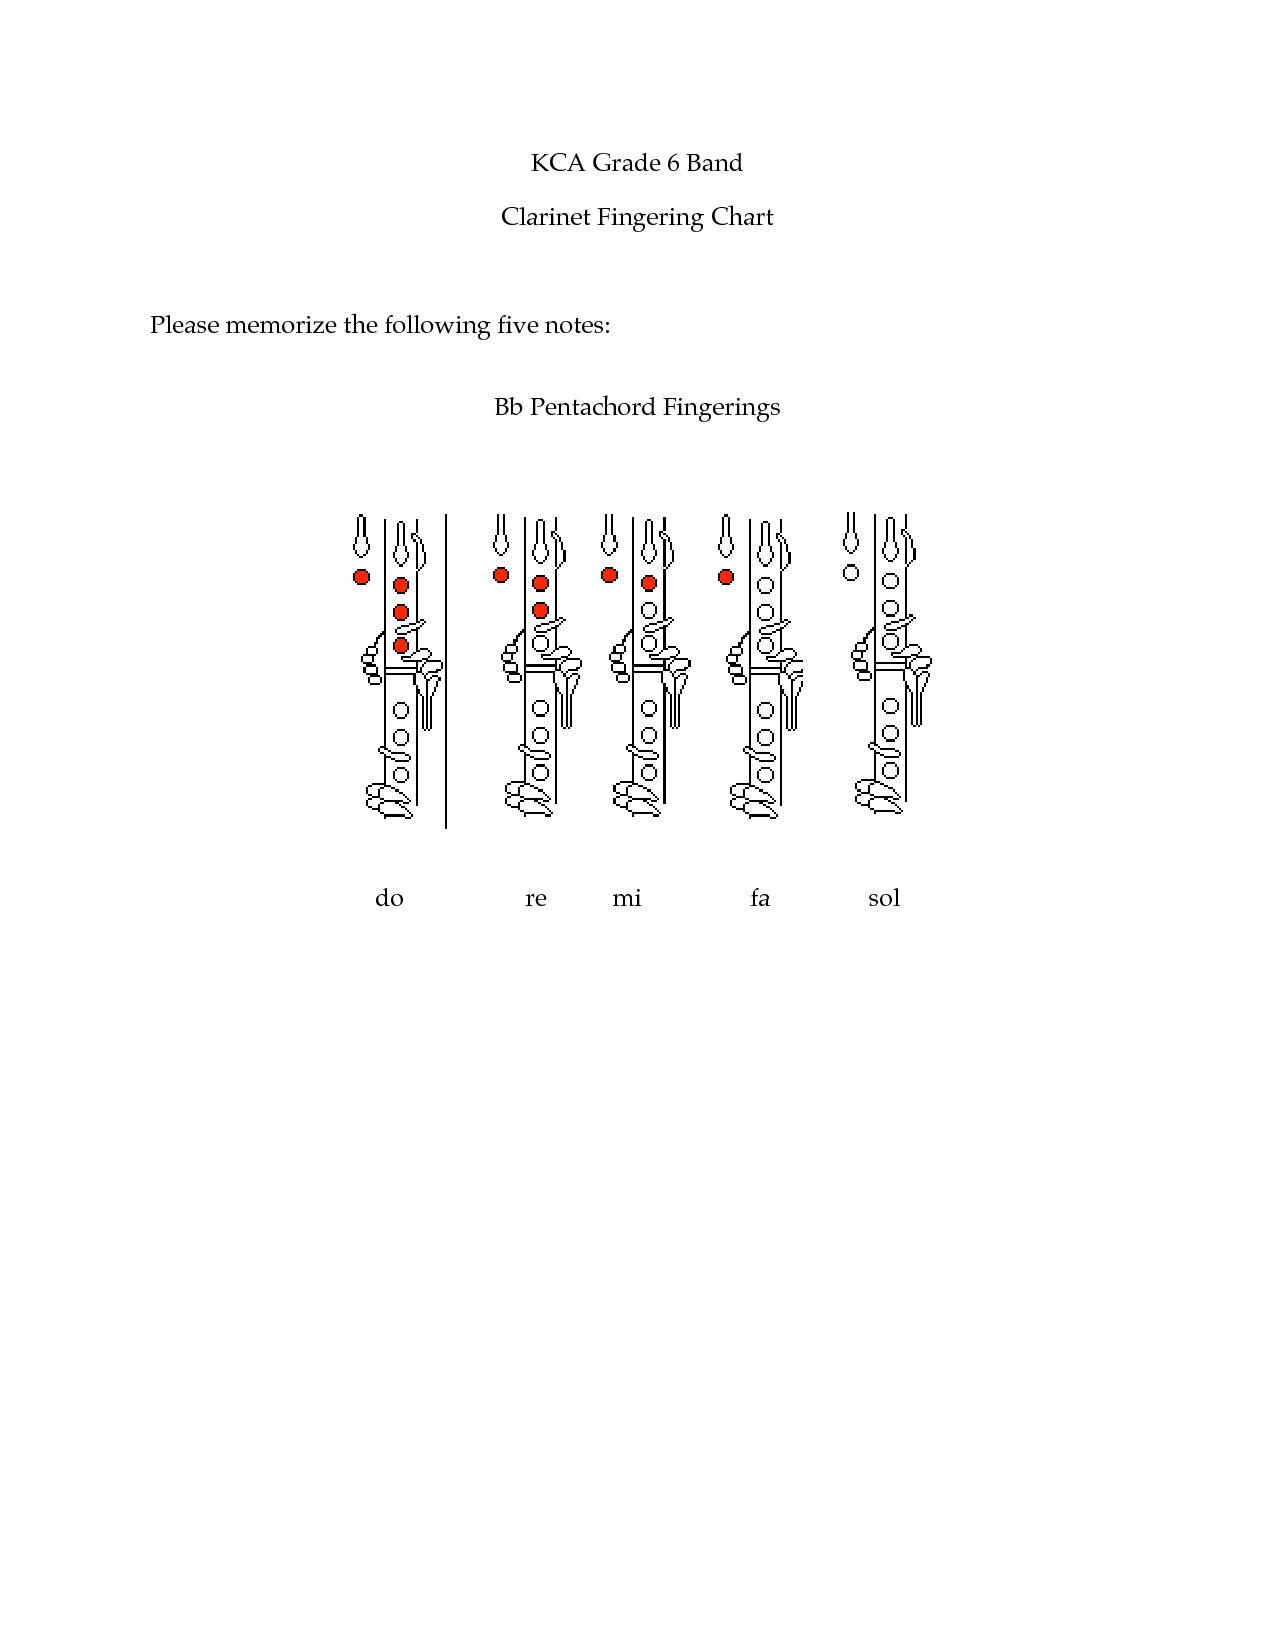 BB Clarinet Fingering Chart Image